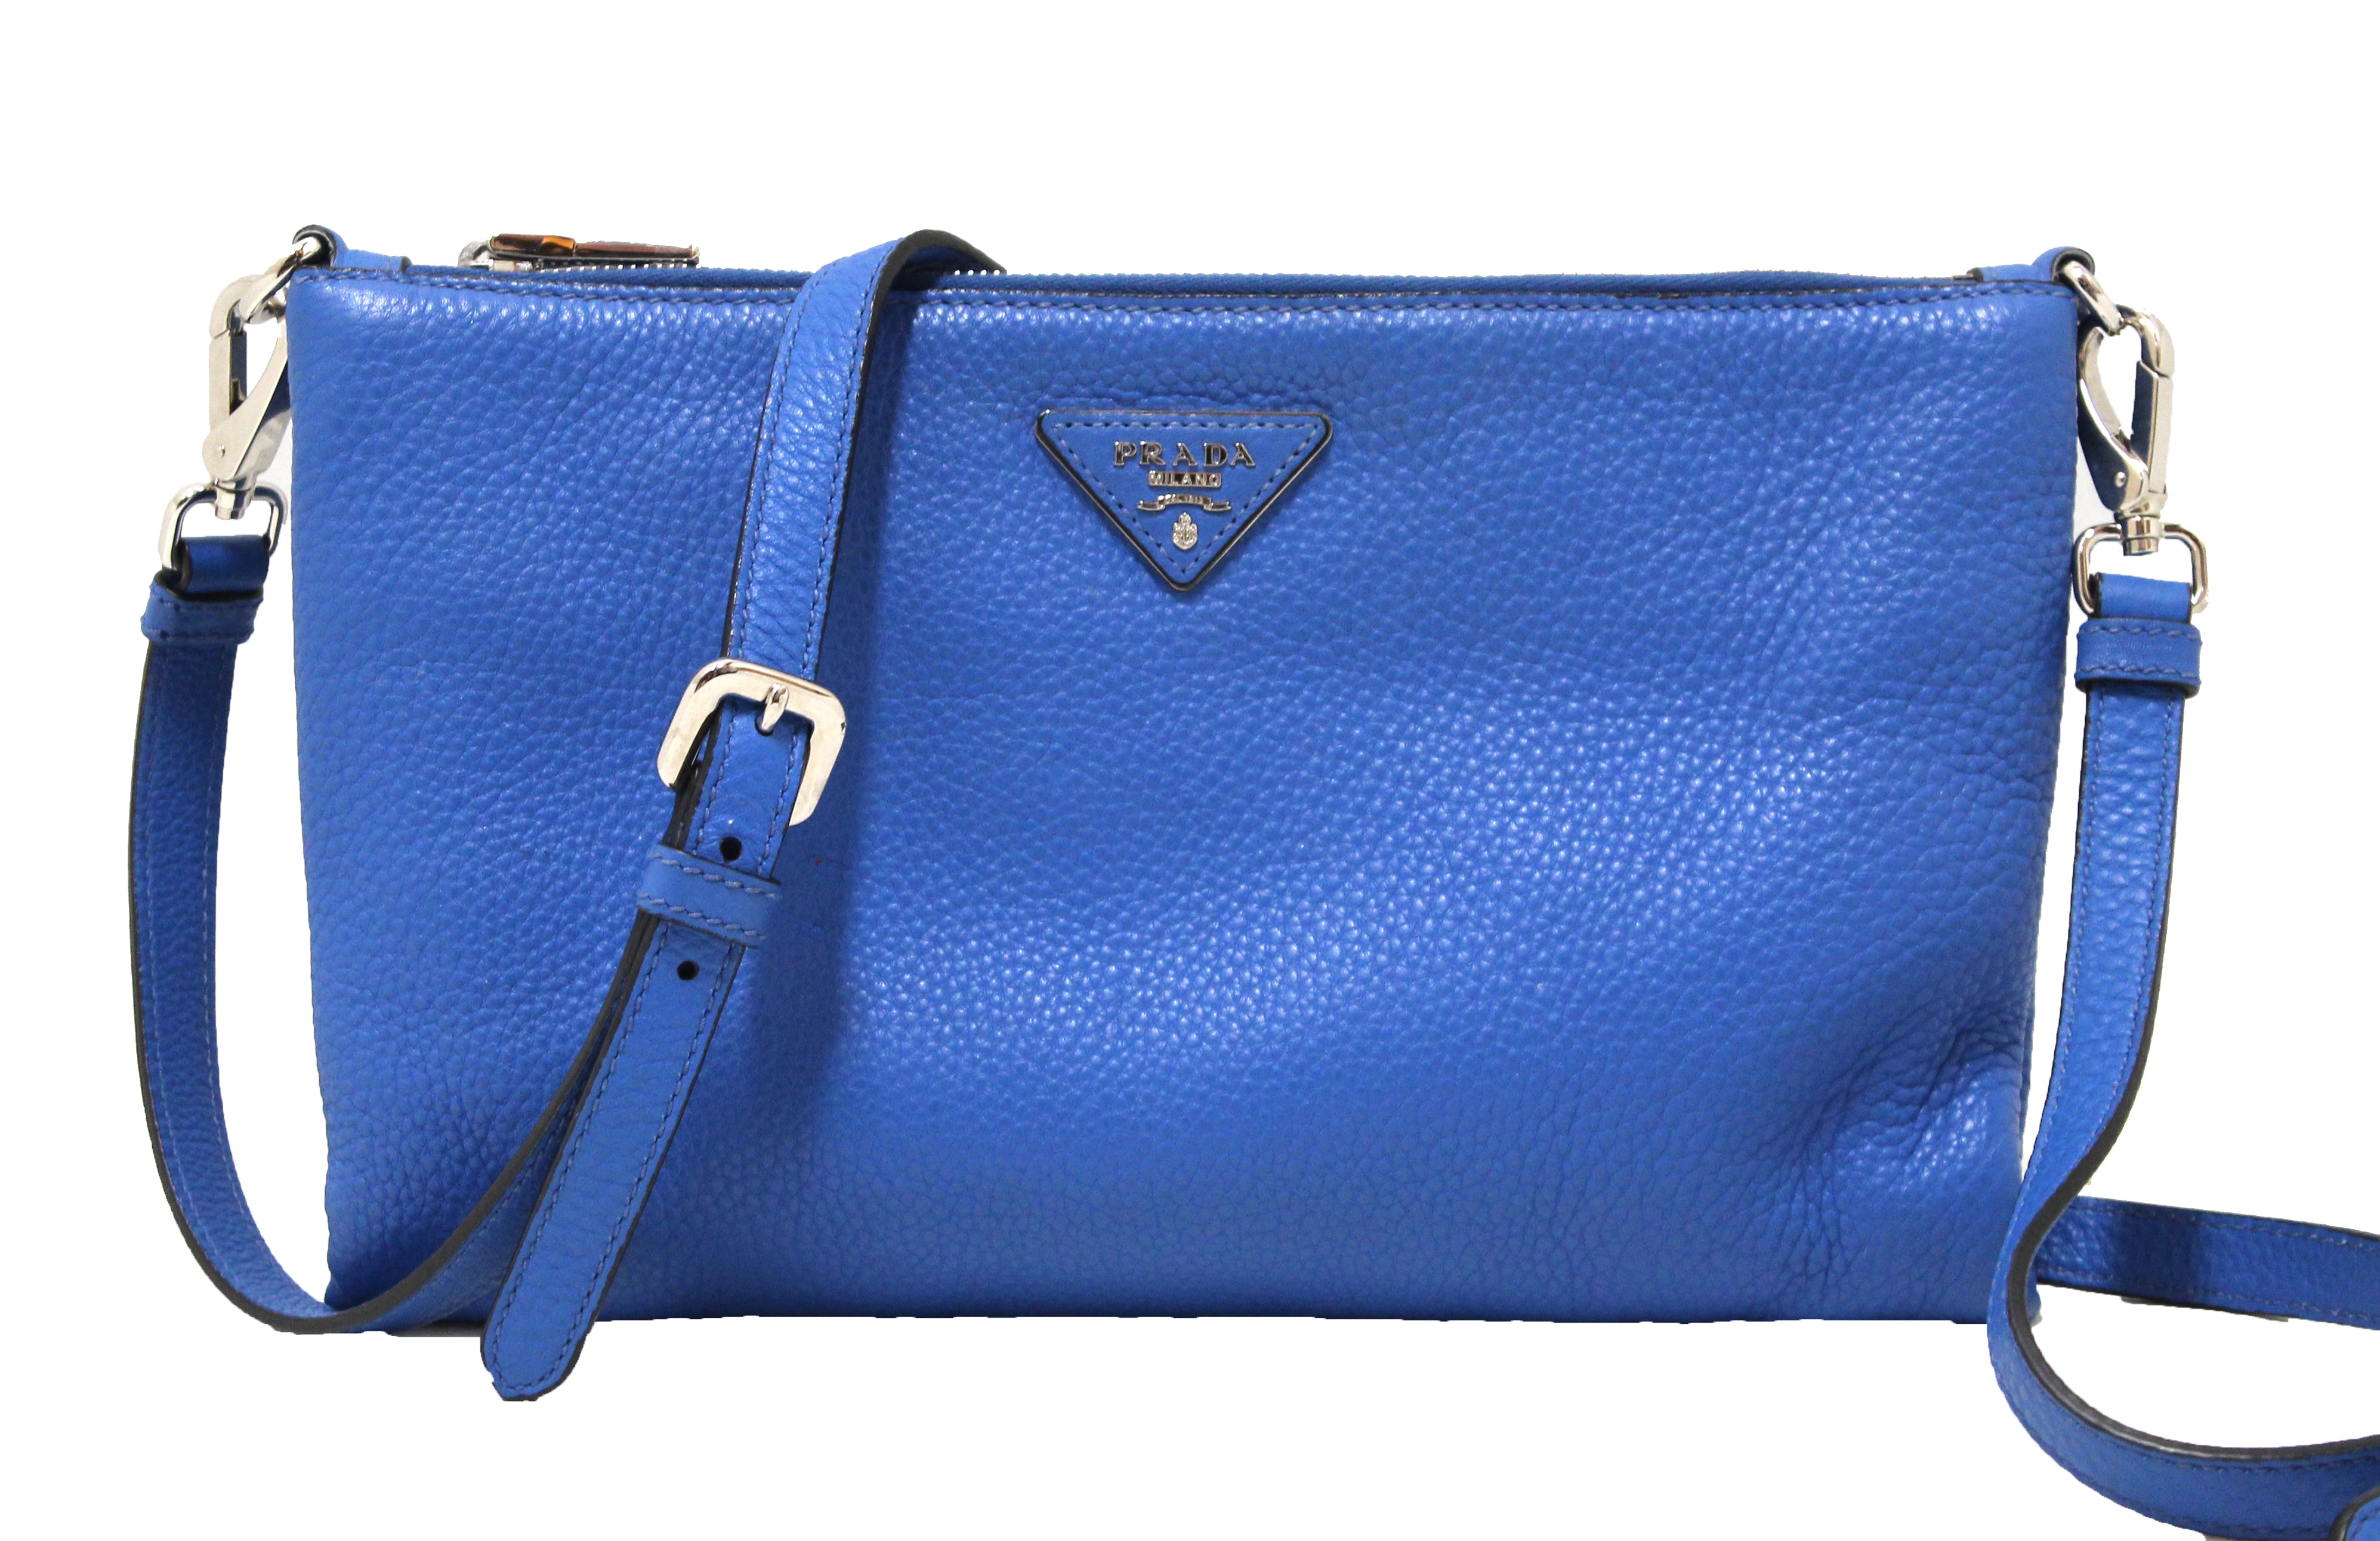 Prada Handbag Black Nylon/Leather Medium Messenger Shoulder Bag